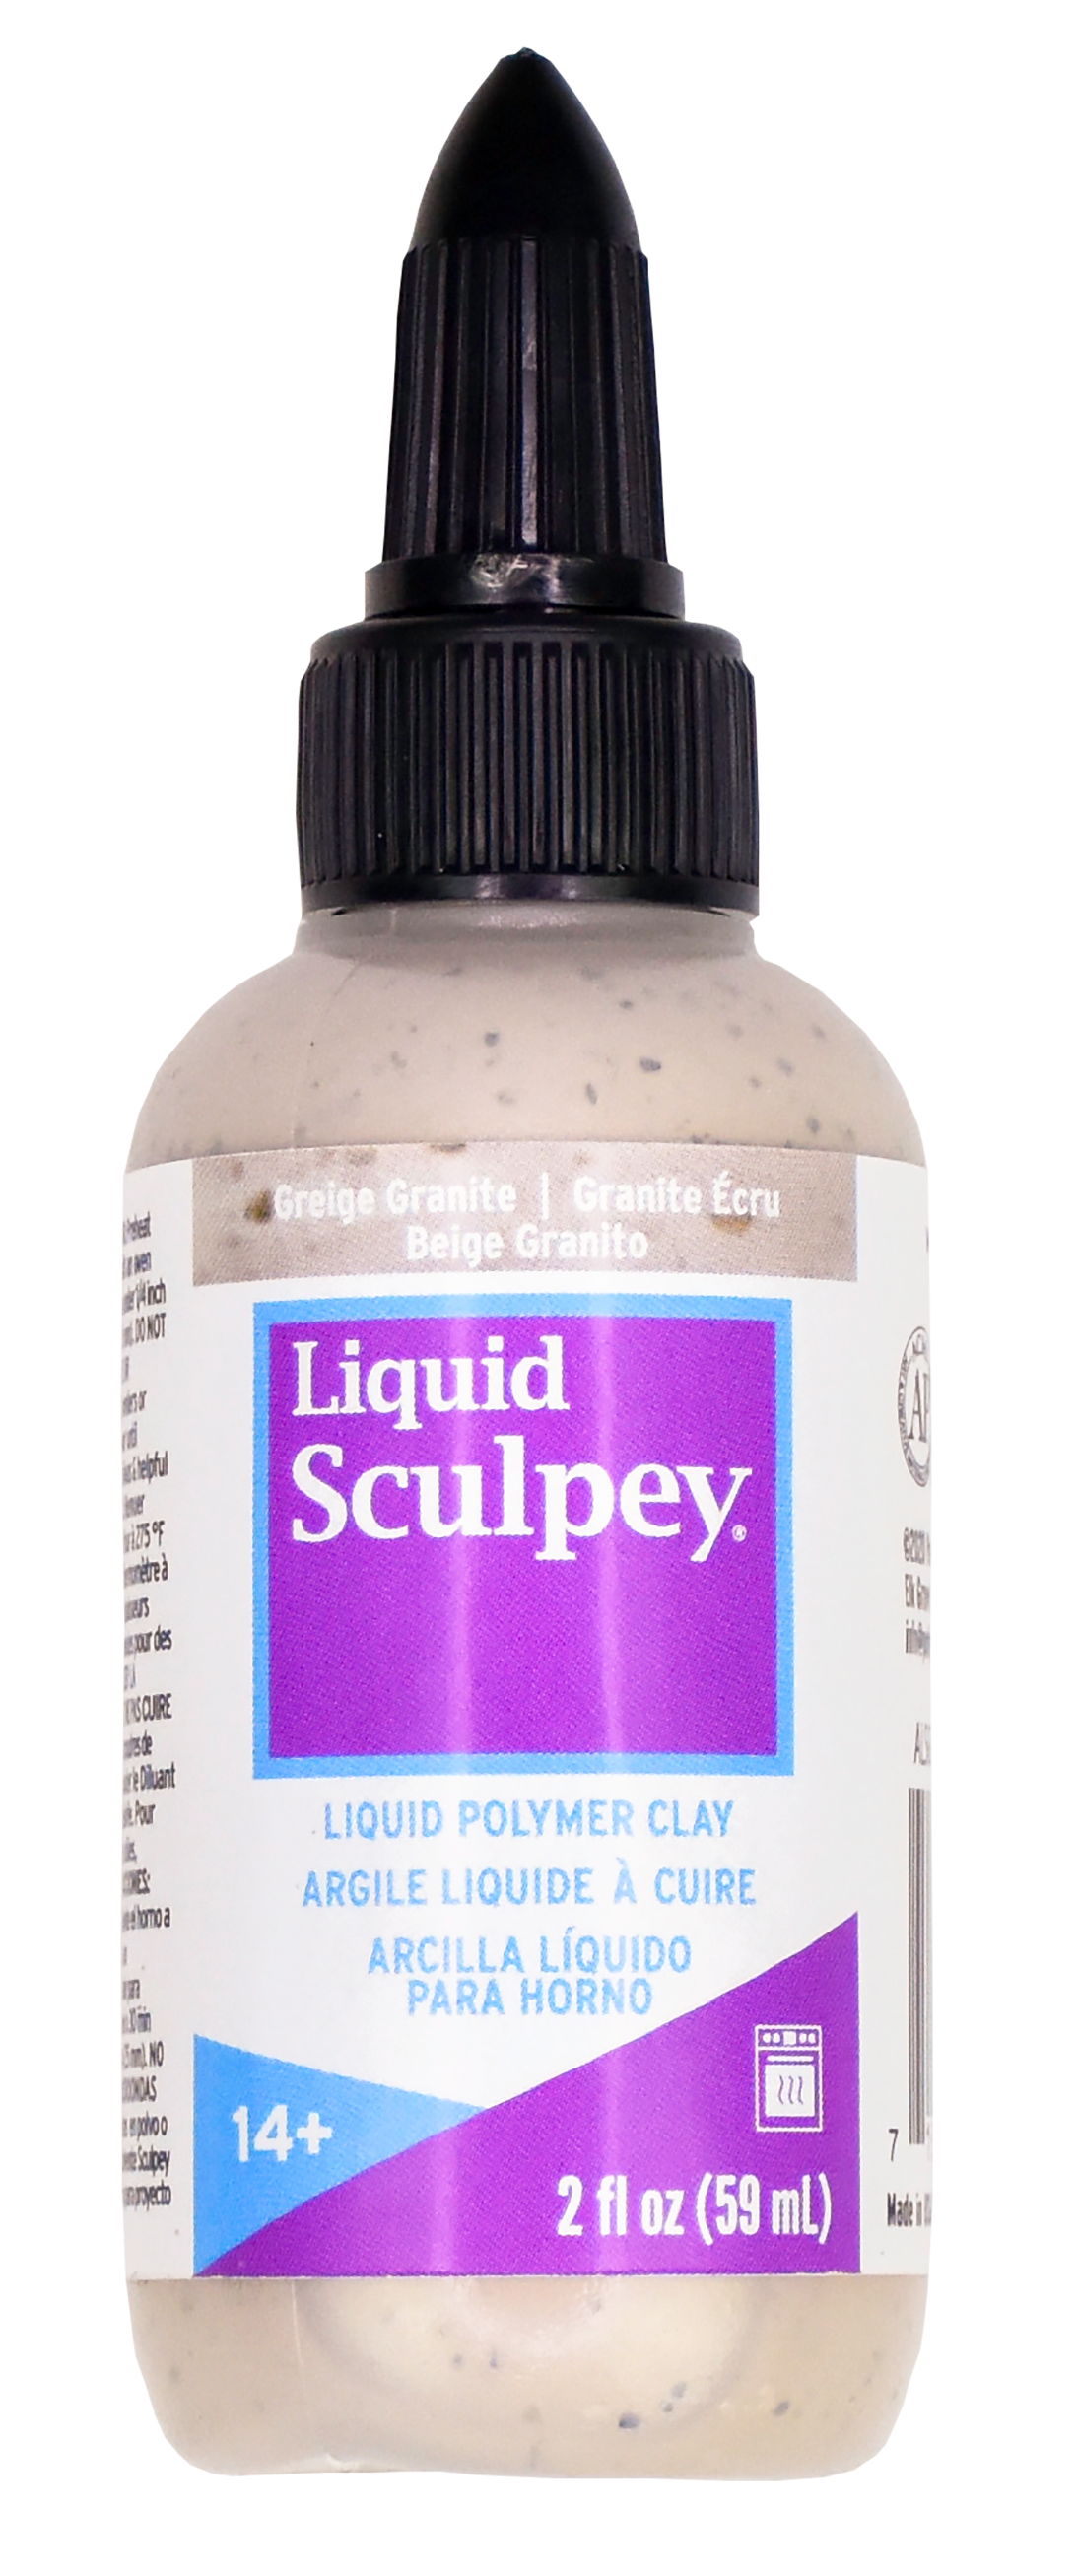 Polyform Products Inc / Sculpey Announces Liquid Sculpey Greige Granite